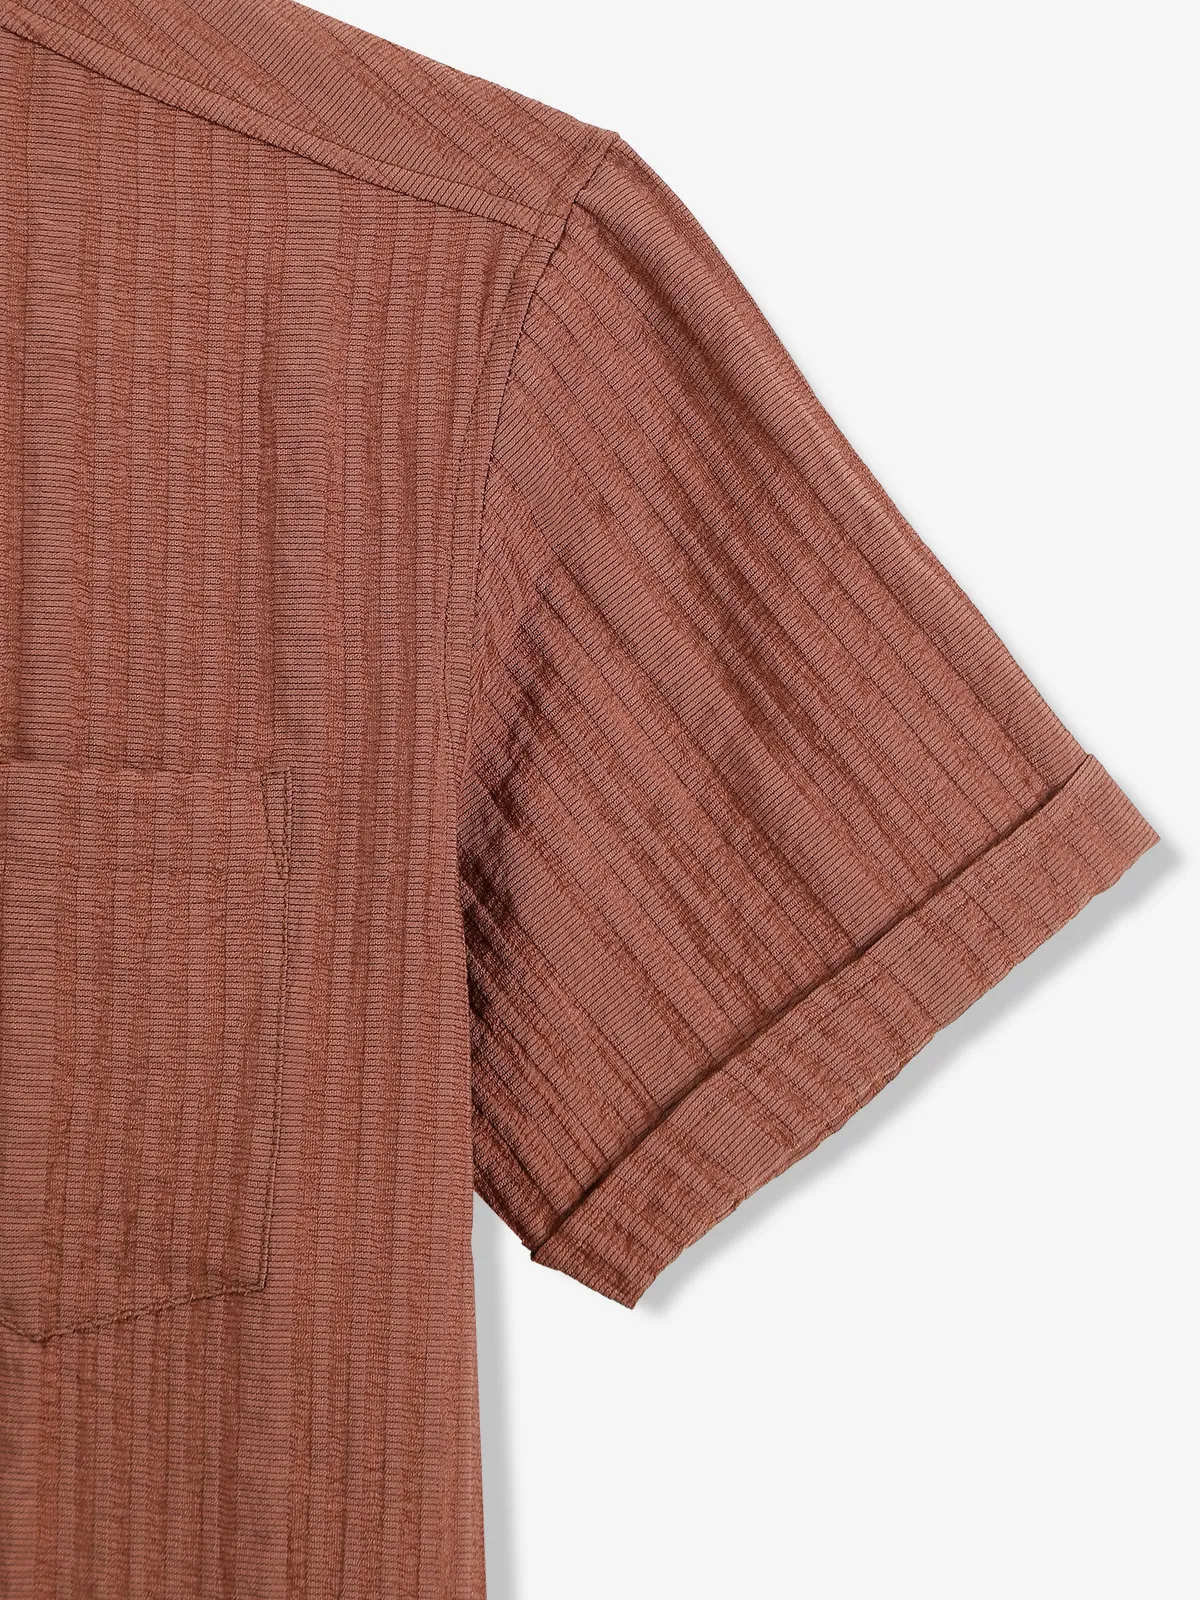 COPPER STONE brown stripe cotton shirt